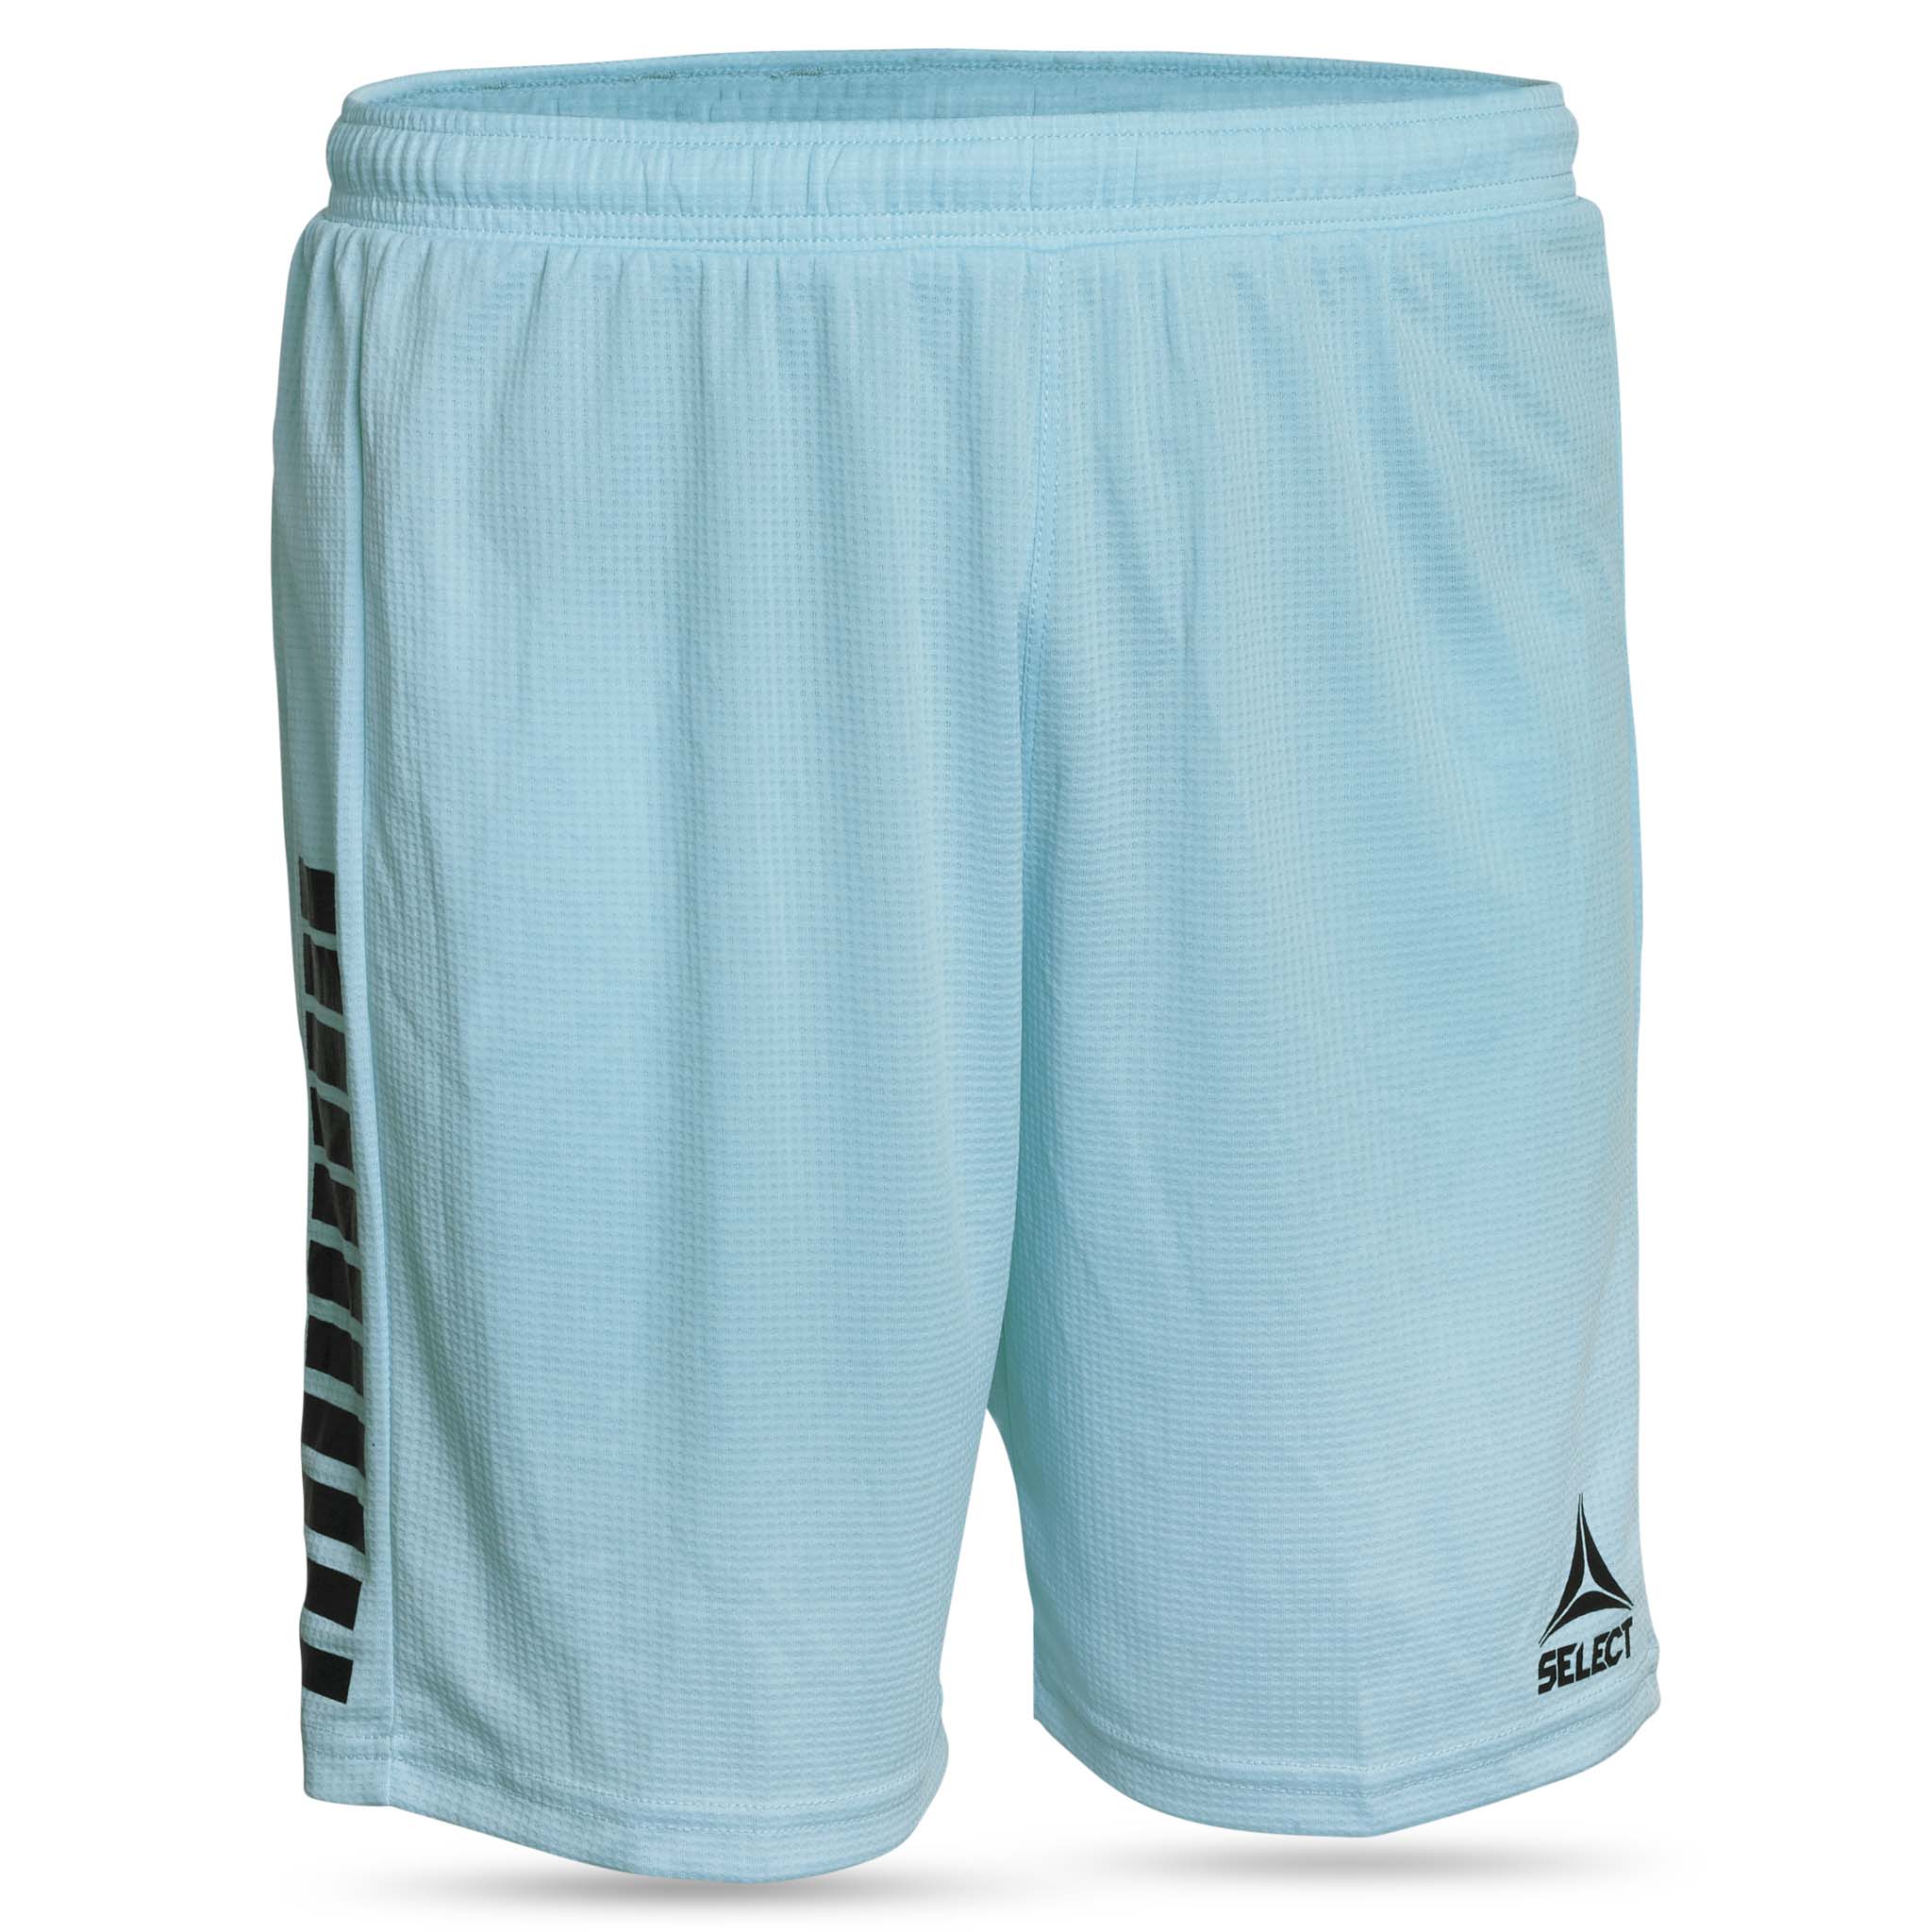 Målmand shorts - Monaco, junior #farve_blå